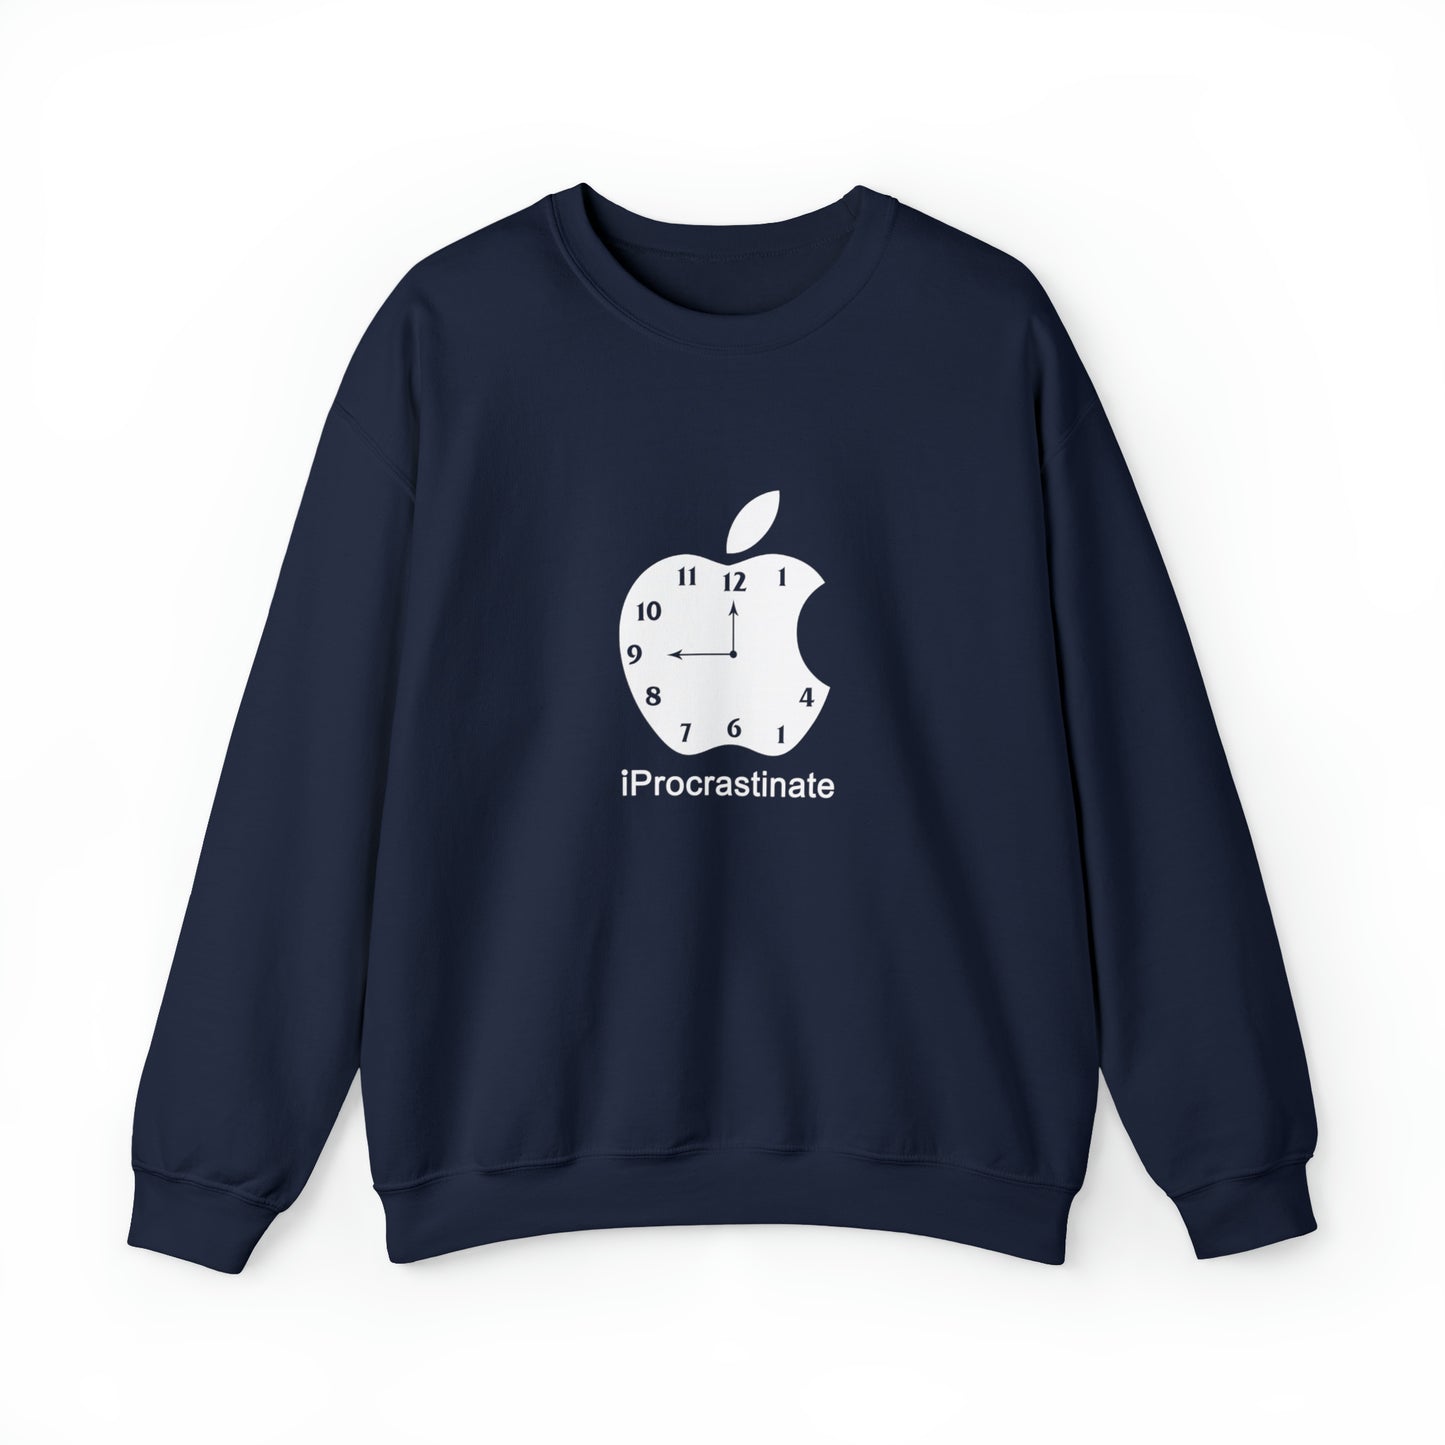 Custom Parody Crewneck Sweatshirt, iProcrastinate Design